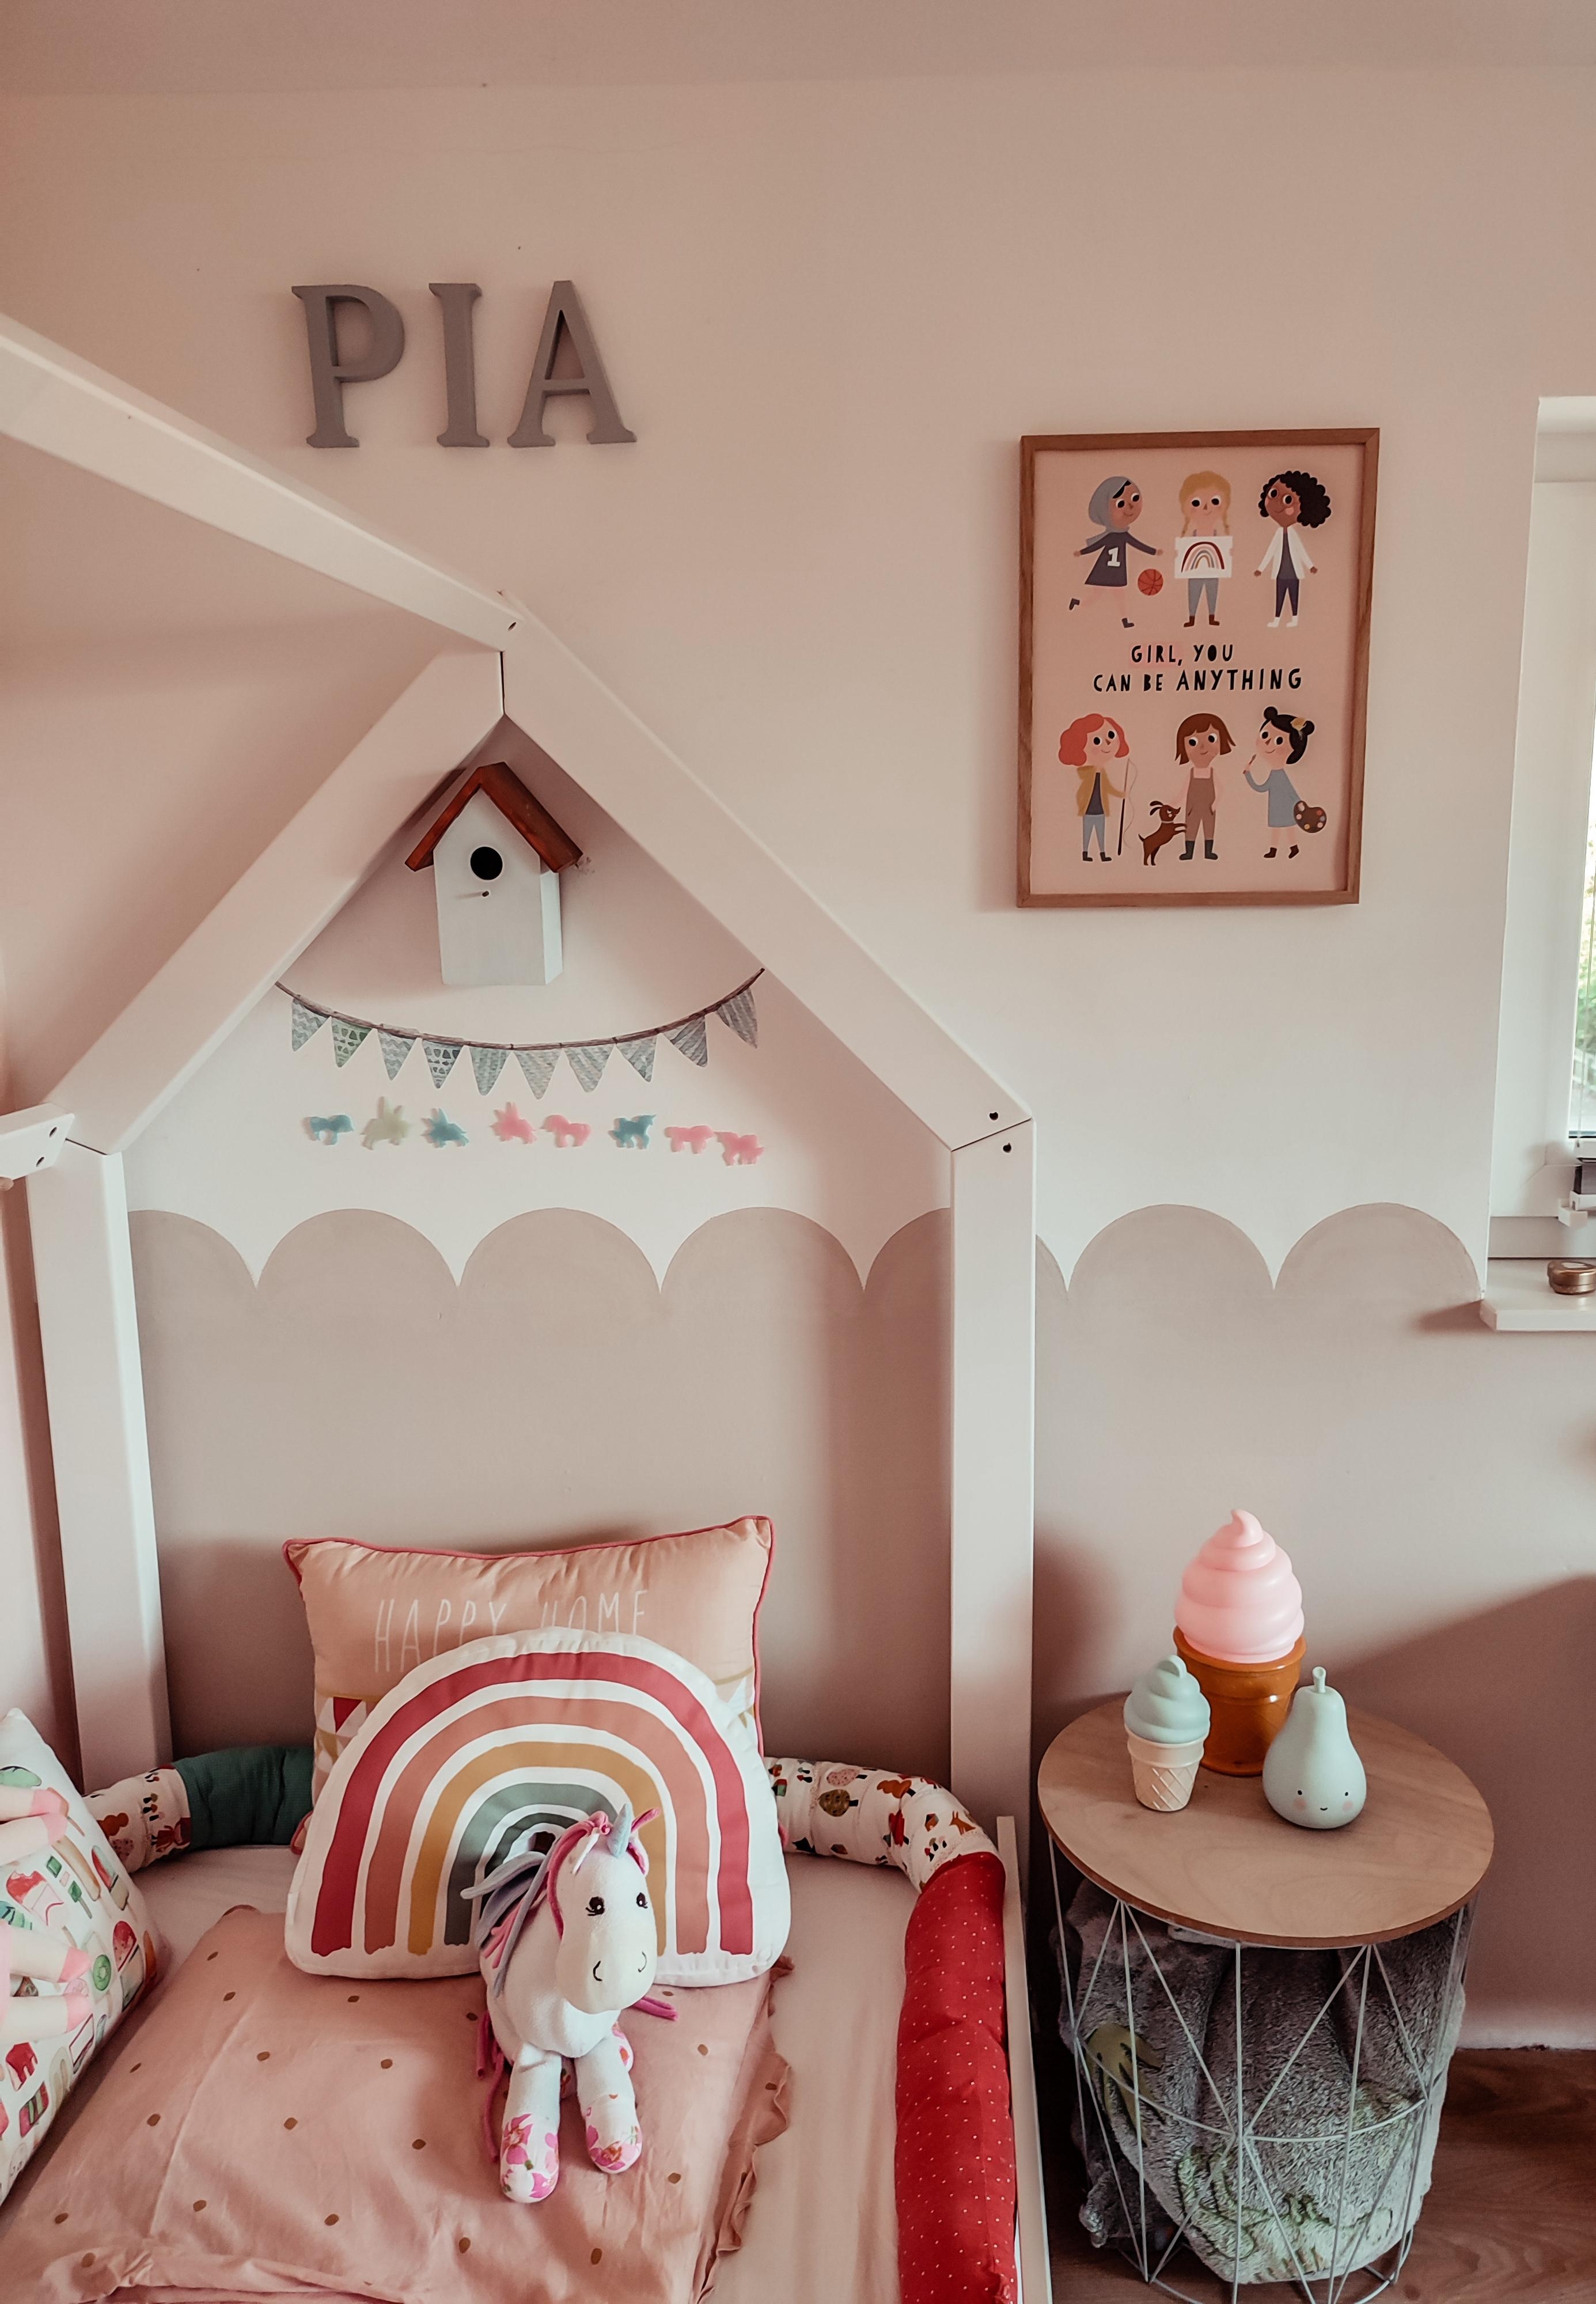 #kidsroom #Kinderzimmer #mädchenzimmer #kinderzimmerdeko
#prints